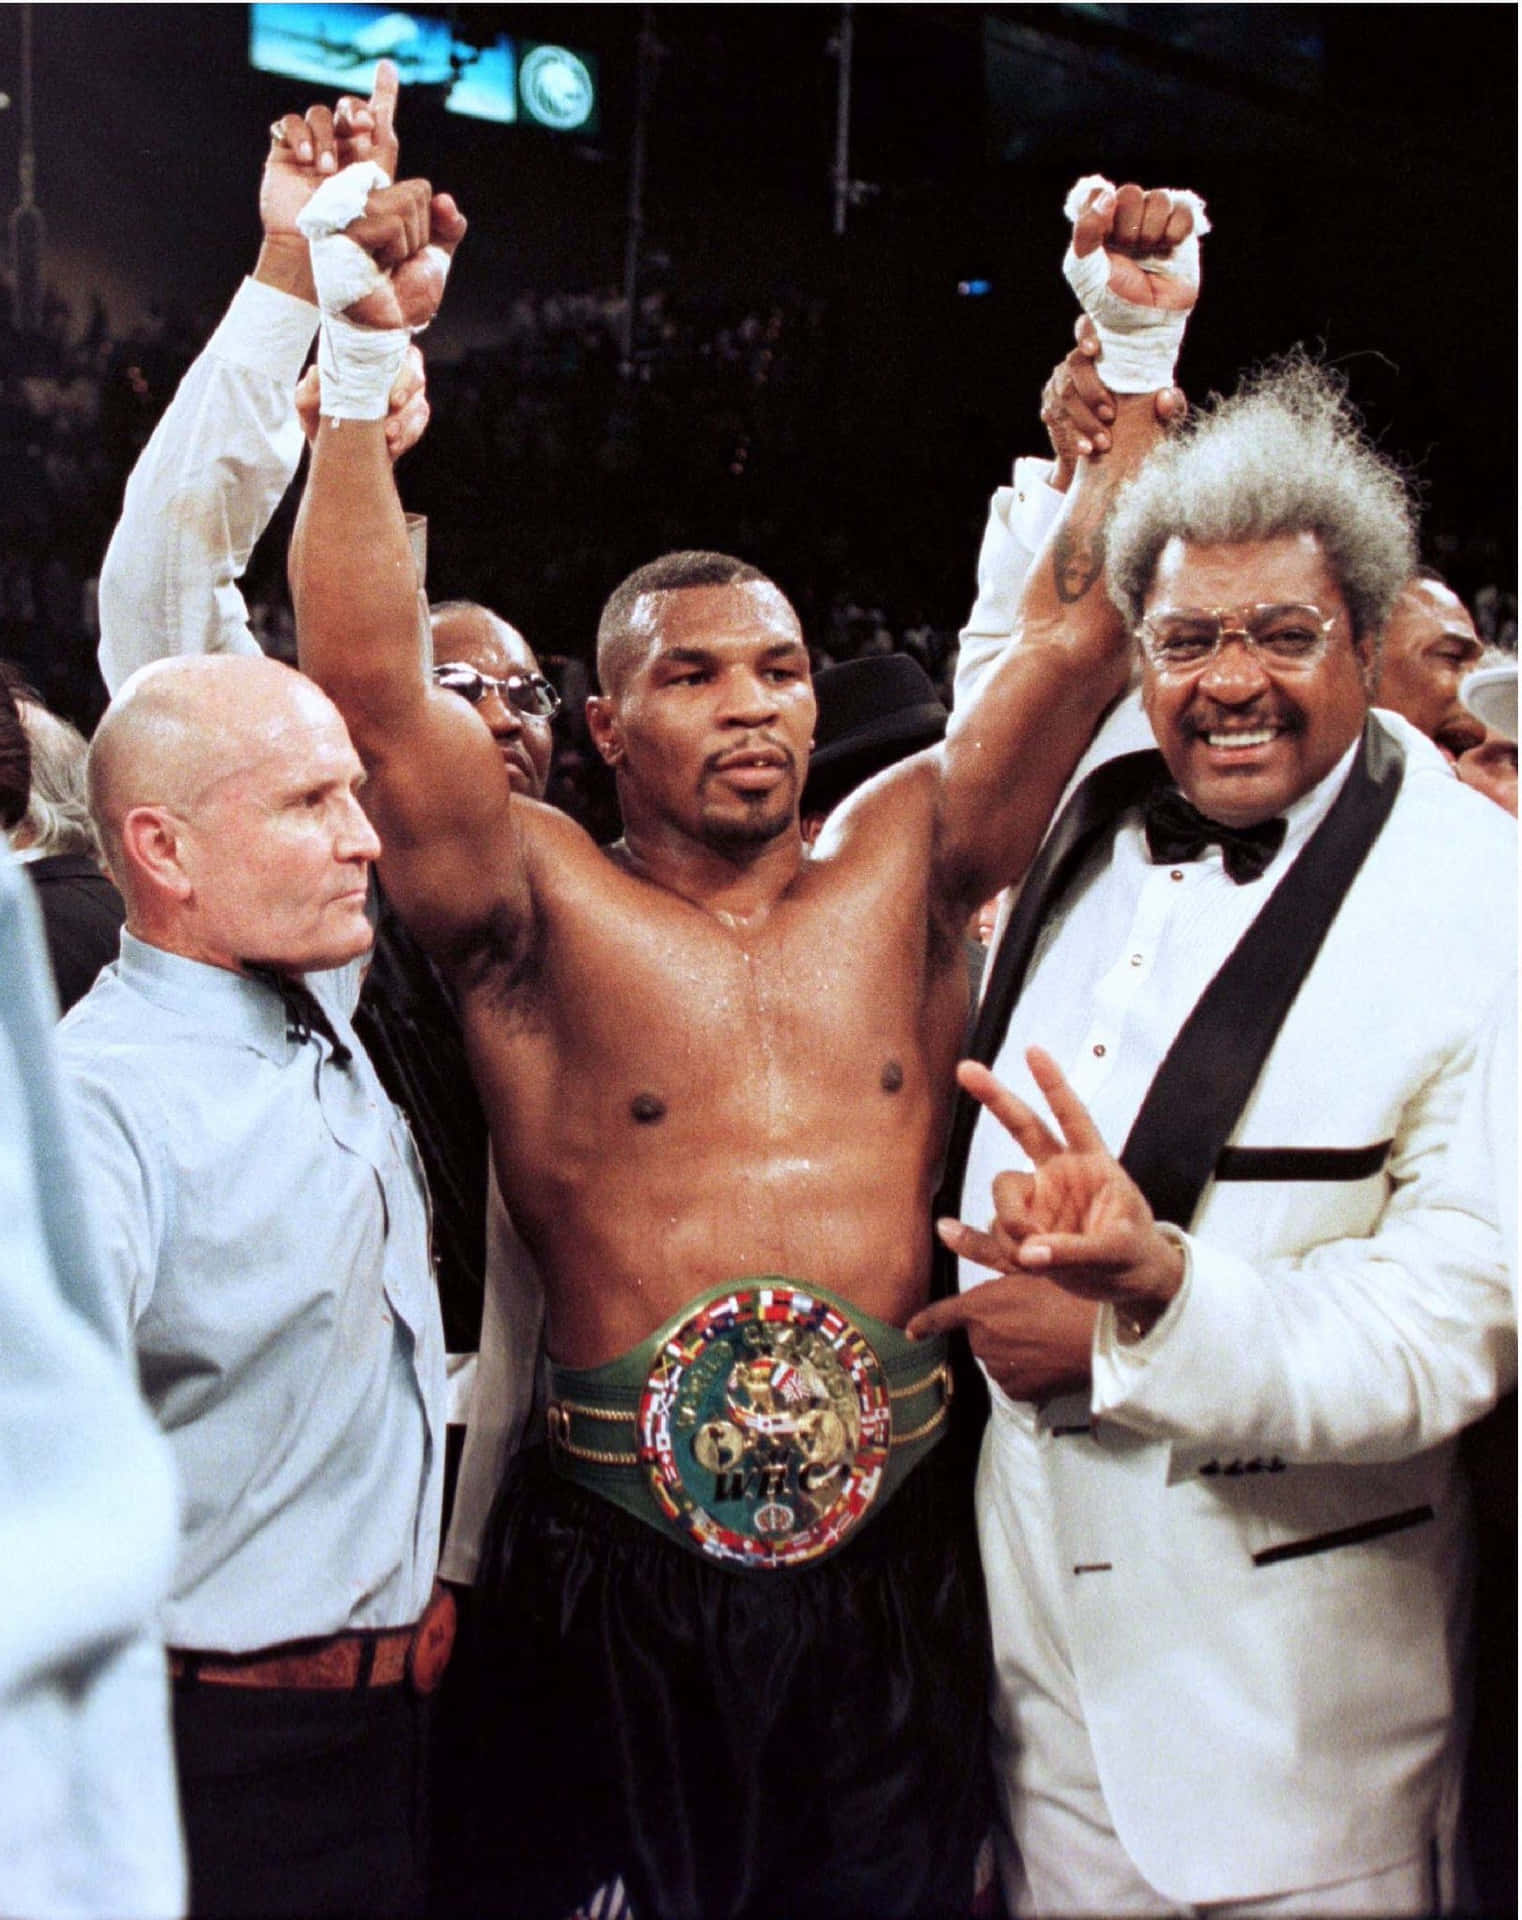 Mike Tyson: The Legendary Heavyweight Boxer